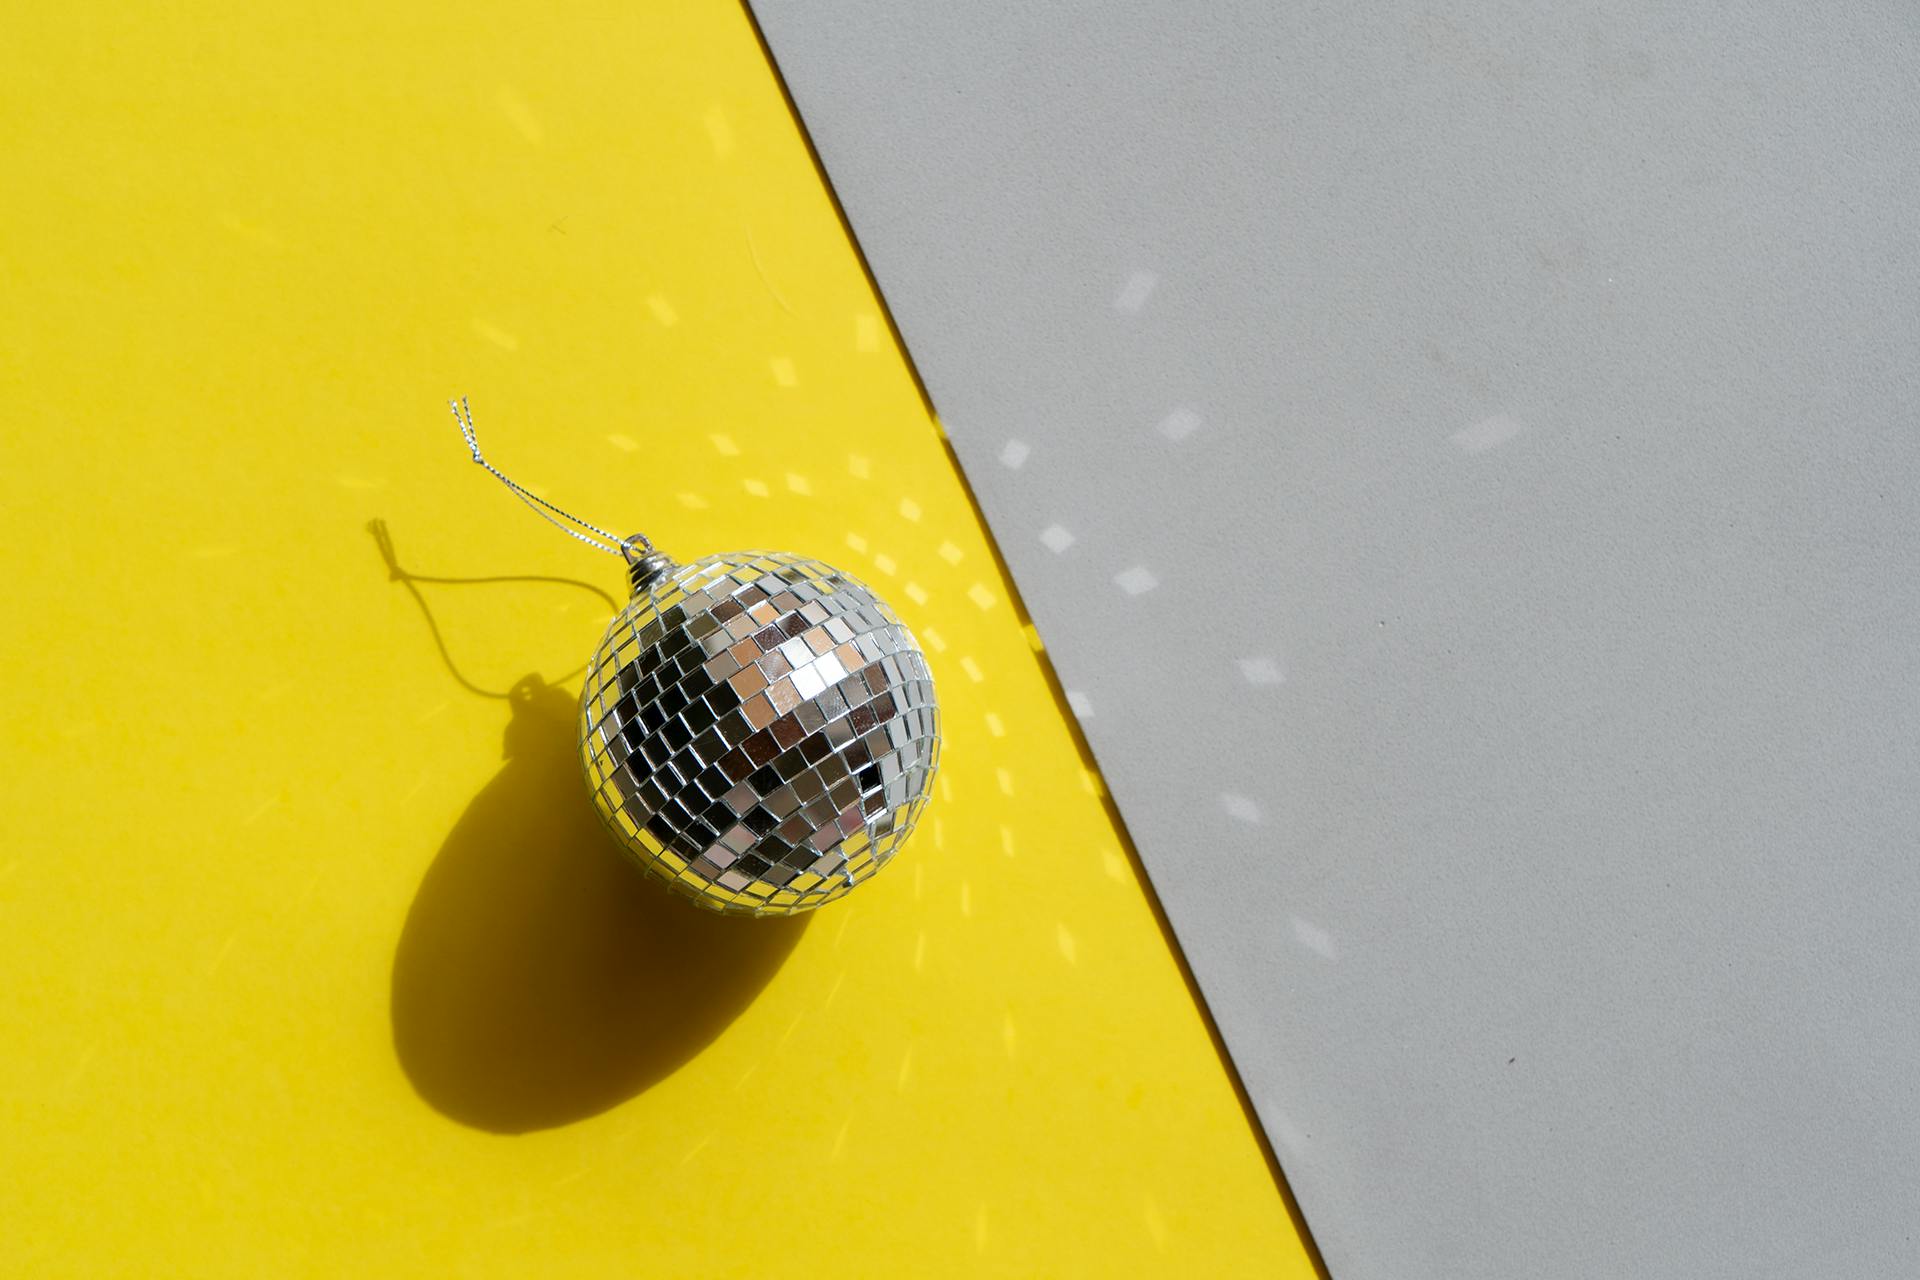 Mini disco ball on yellow and grey background